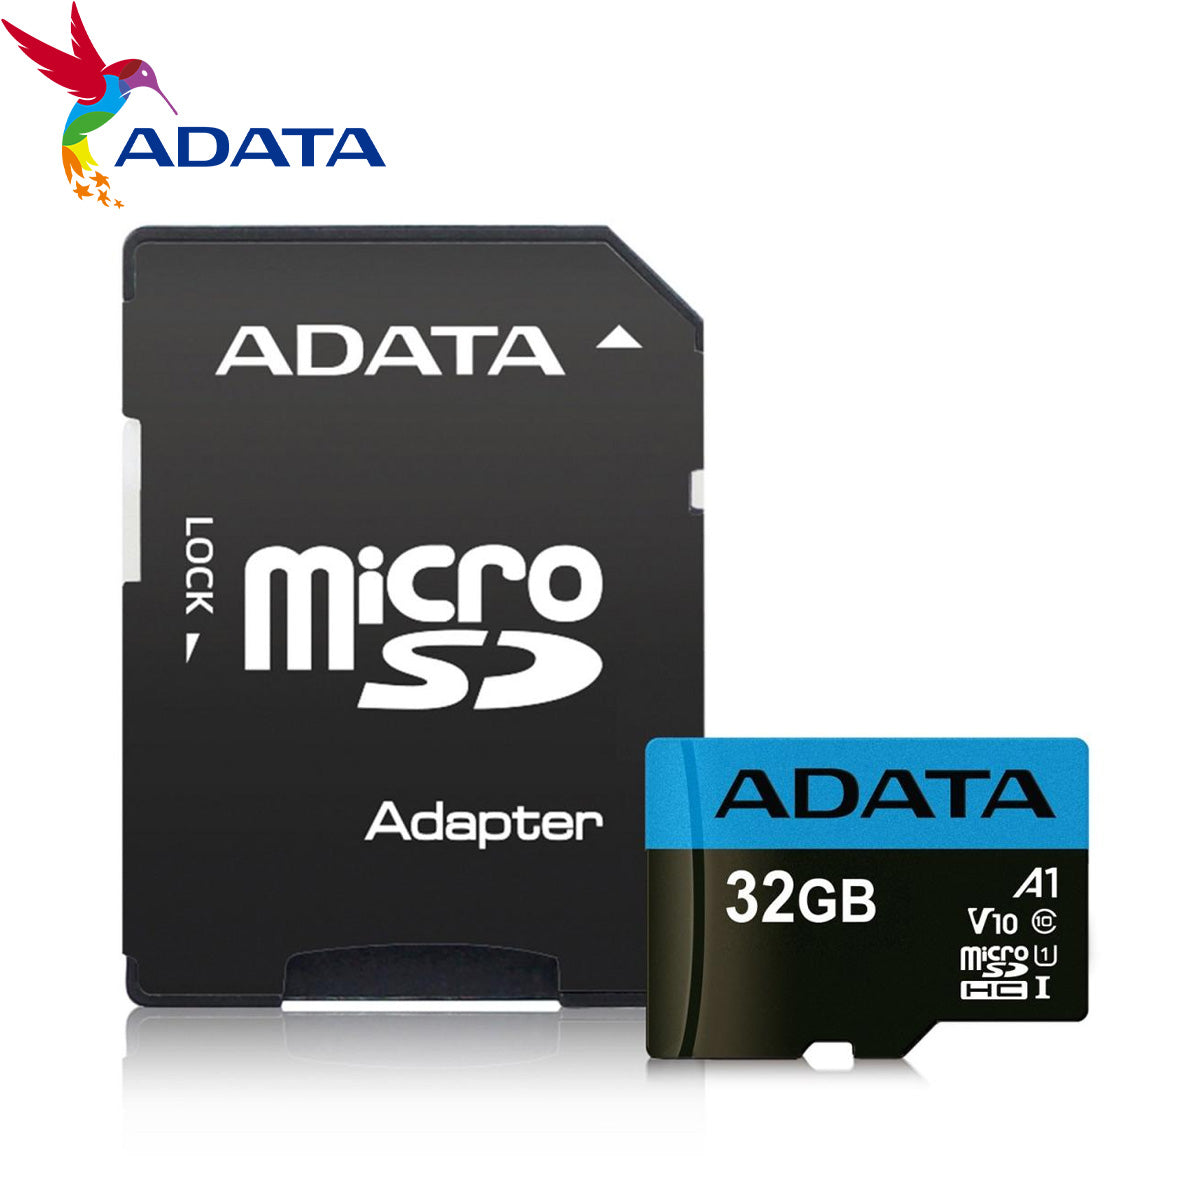 ADATA MICROSDHC 32GB UHS-I CLASS10 85 RETAIL